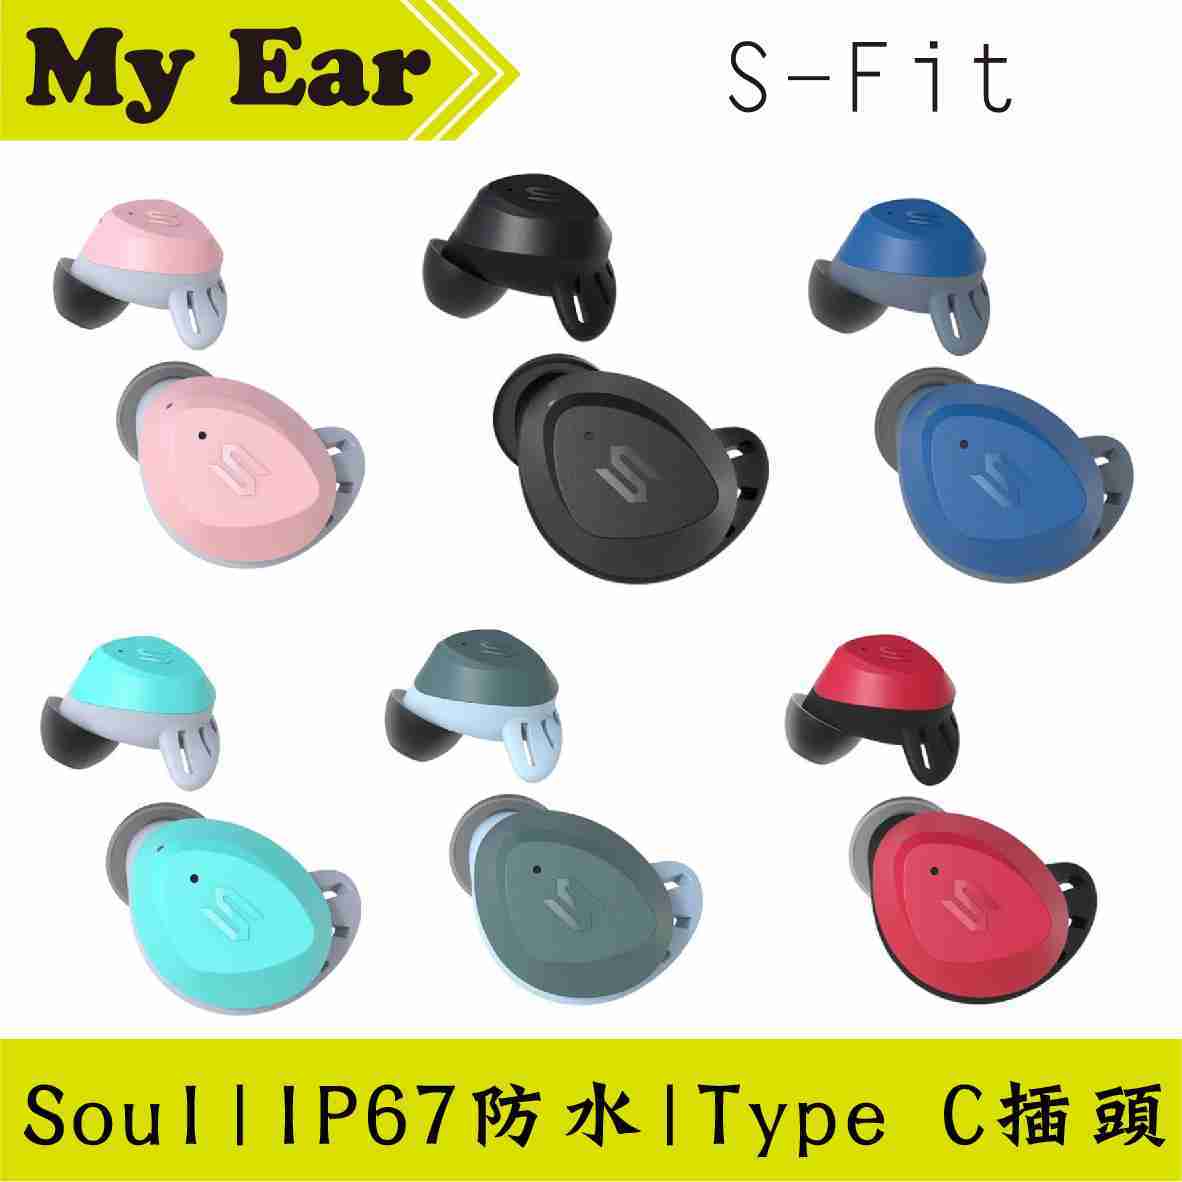 Soul S-Fit 深綠色 環境音效 IP67 防塵 防水 藍芽 耳機 | My Ear 耳機專門店